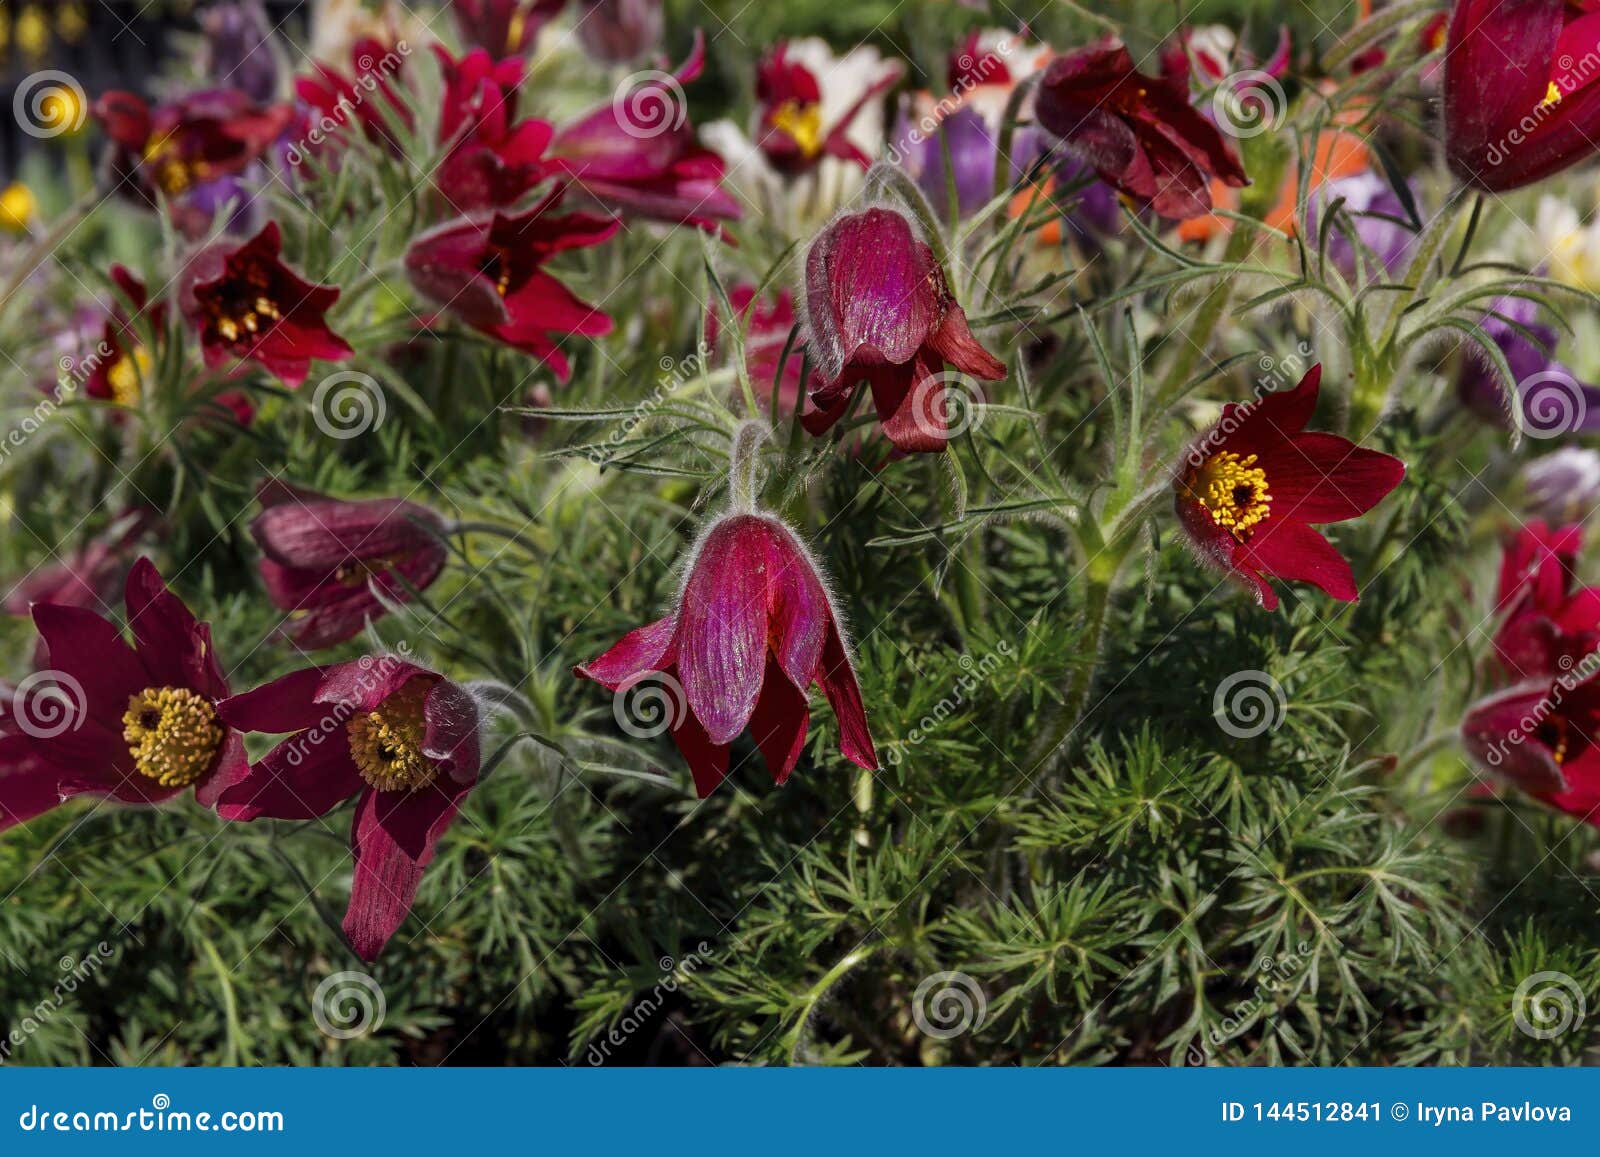 Red Spring Flowers Anemones Stock Image - Image of crocus, pasqueflower ...